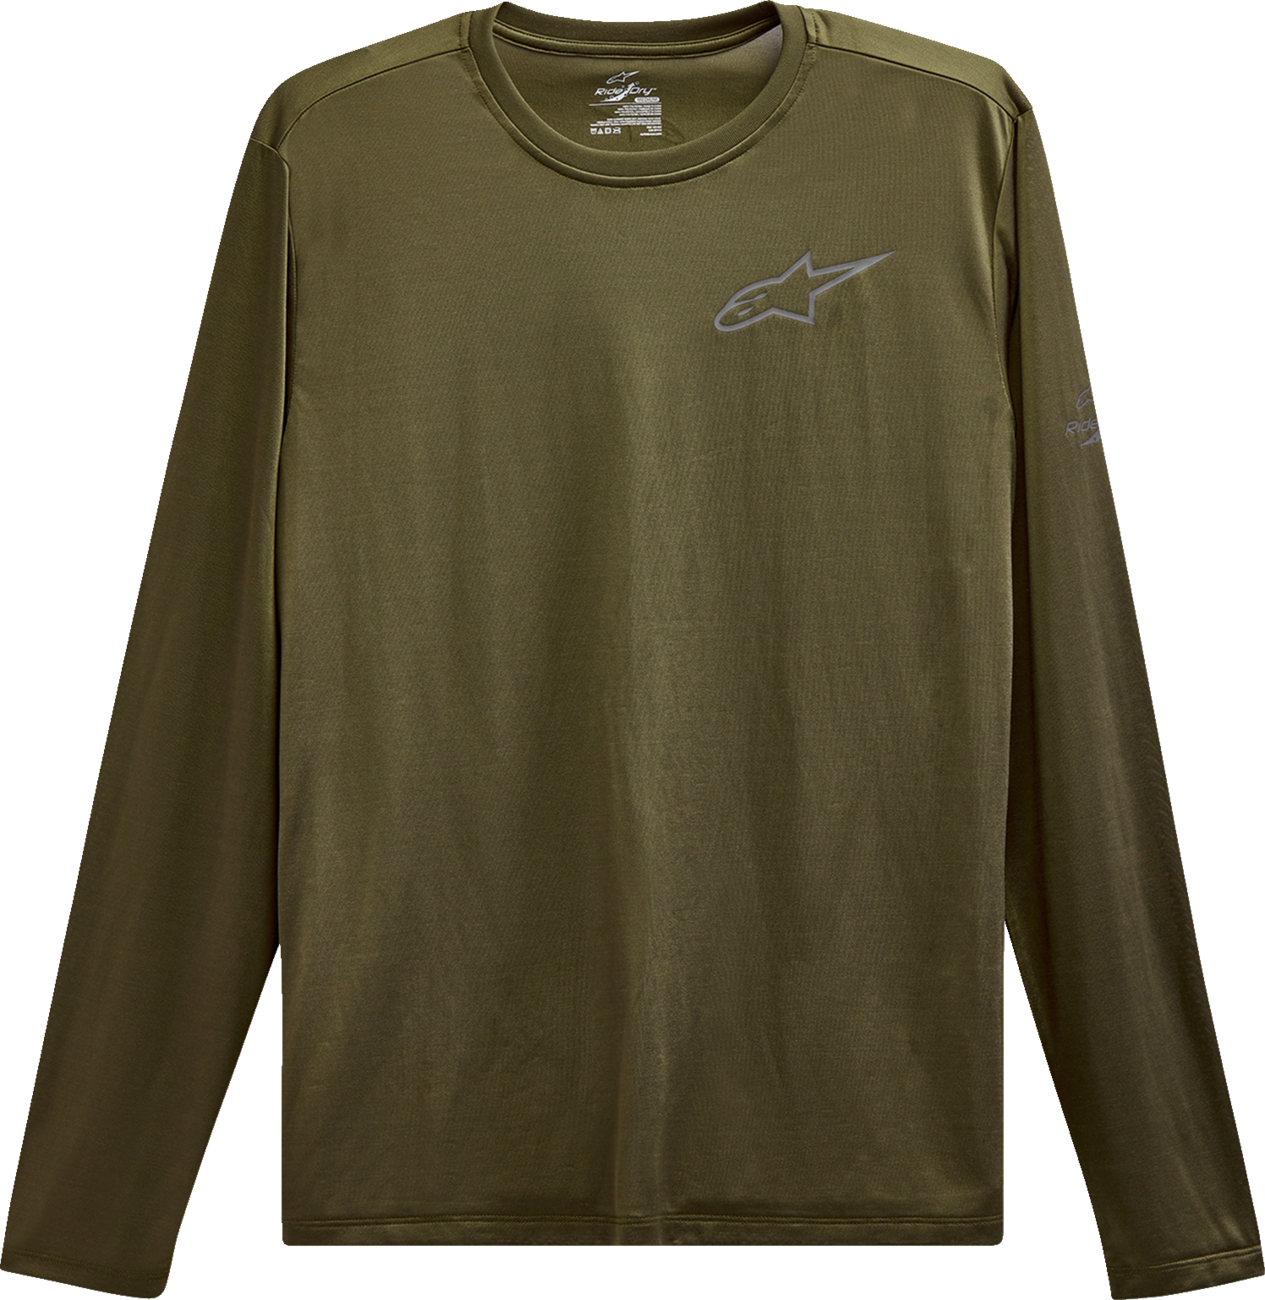 ALPINESTARS Pursue Performance Long-Sleeve T-Shirt - Military Green - Medium 123271000690M